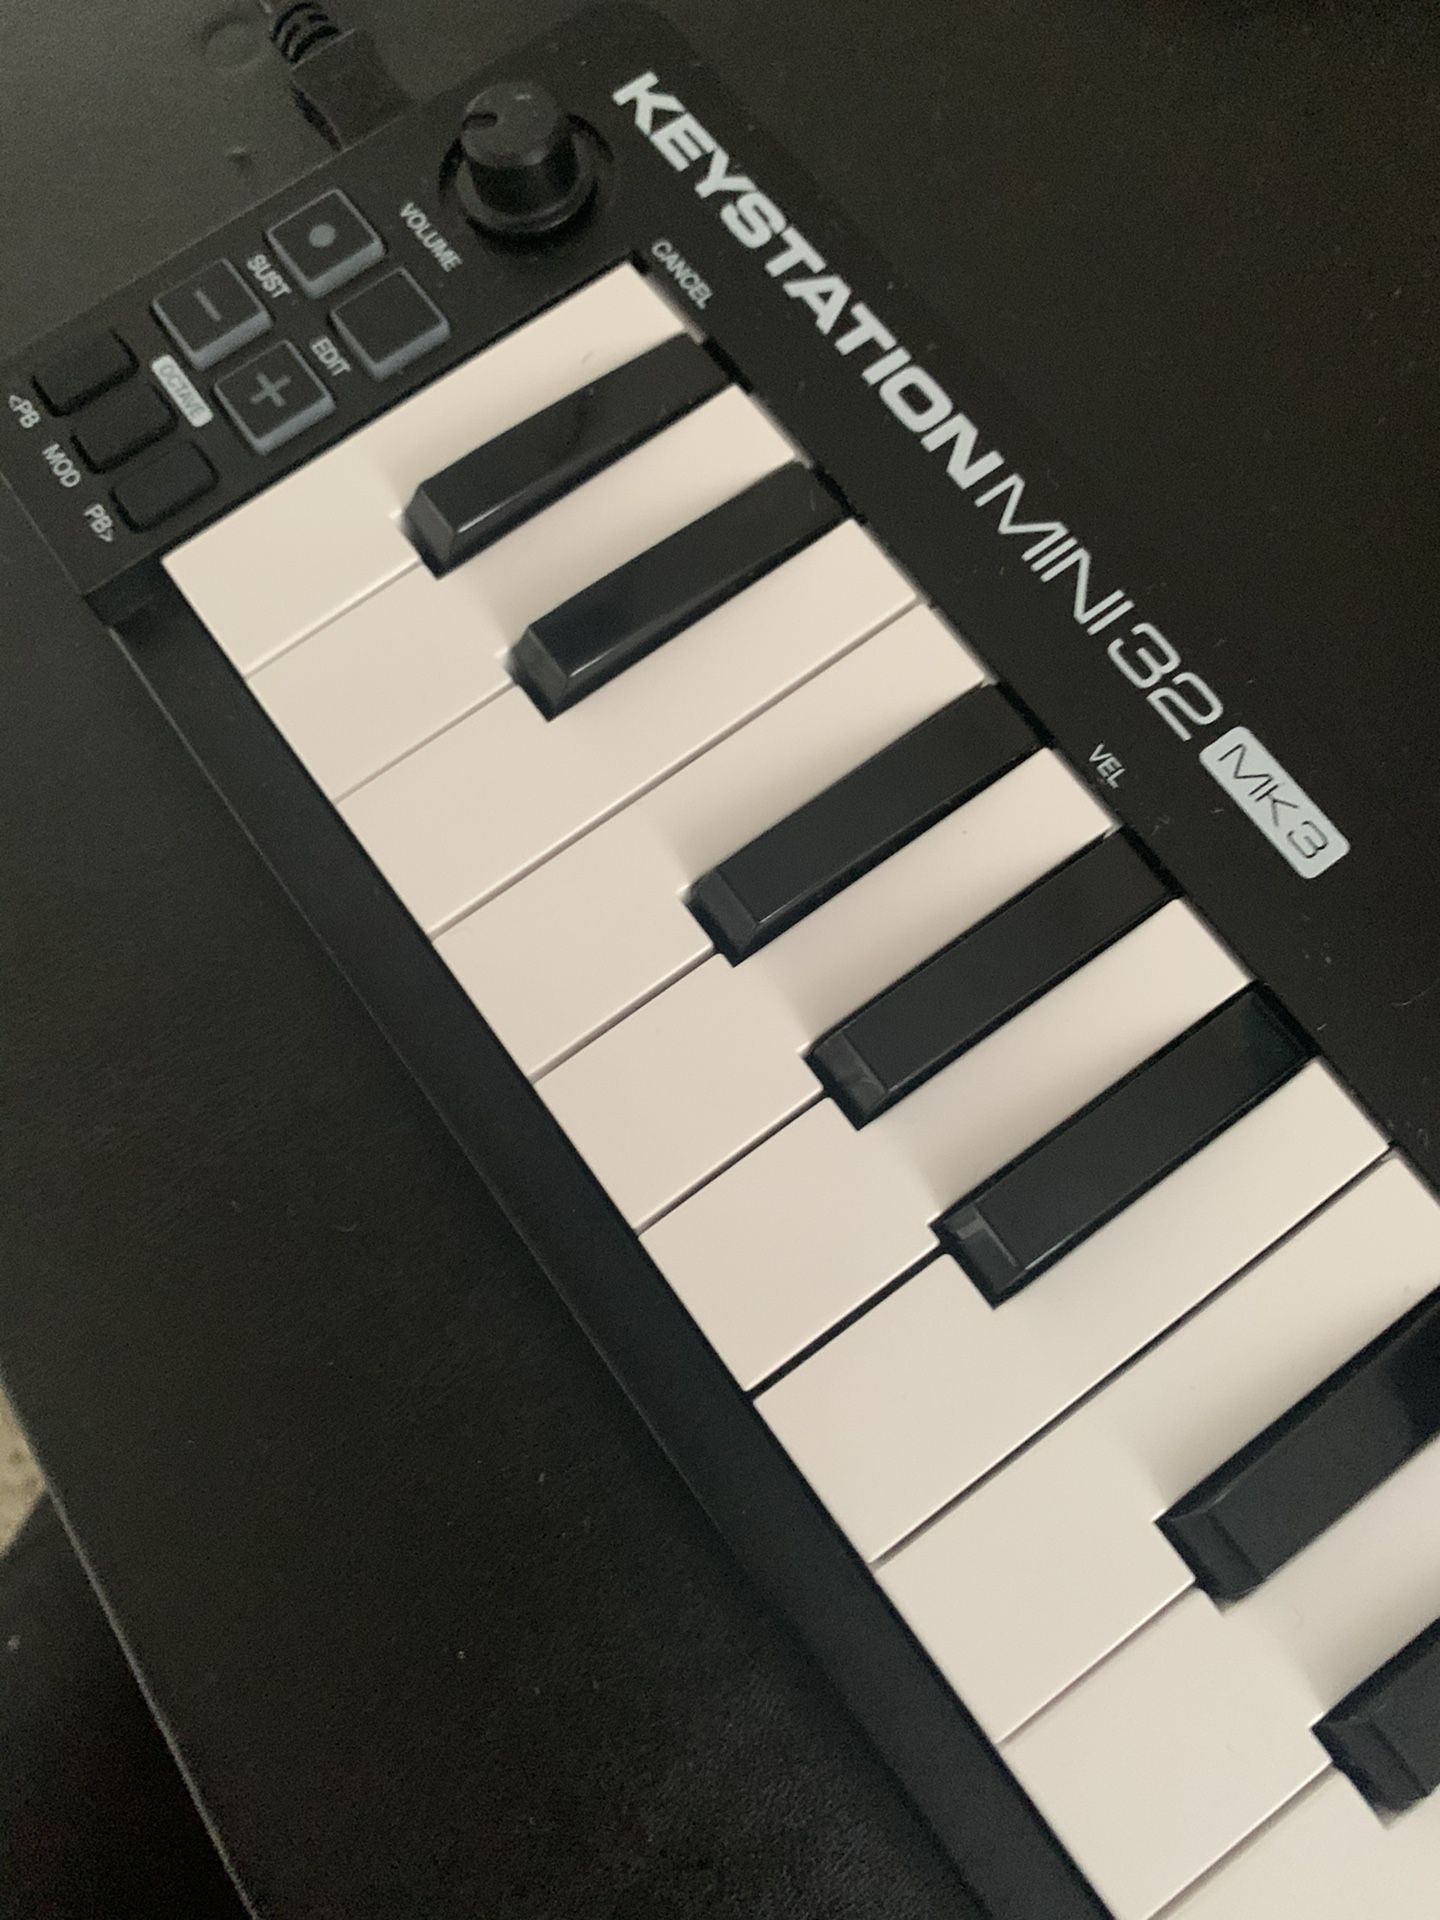 Keystation m audio mk3 keyboard